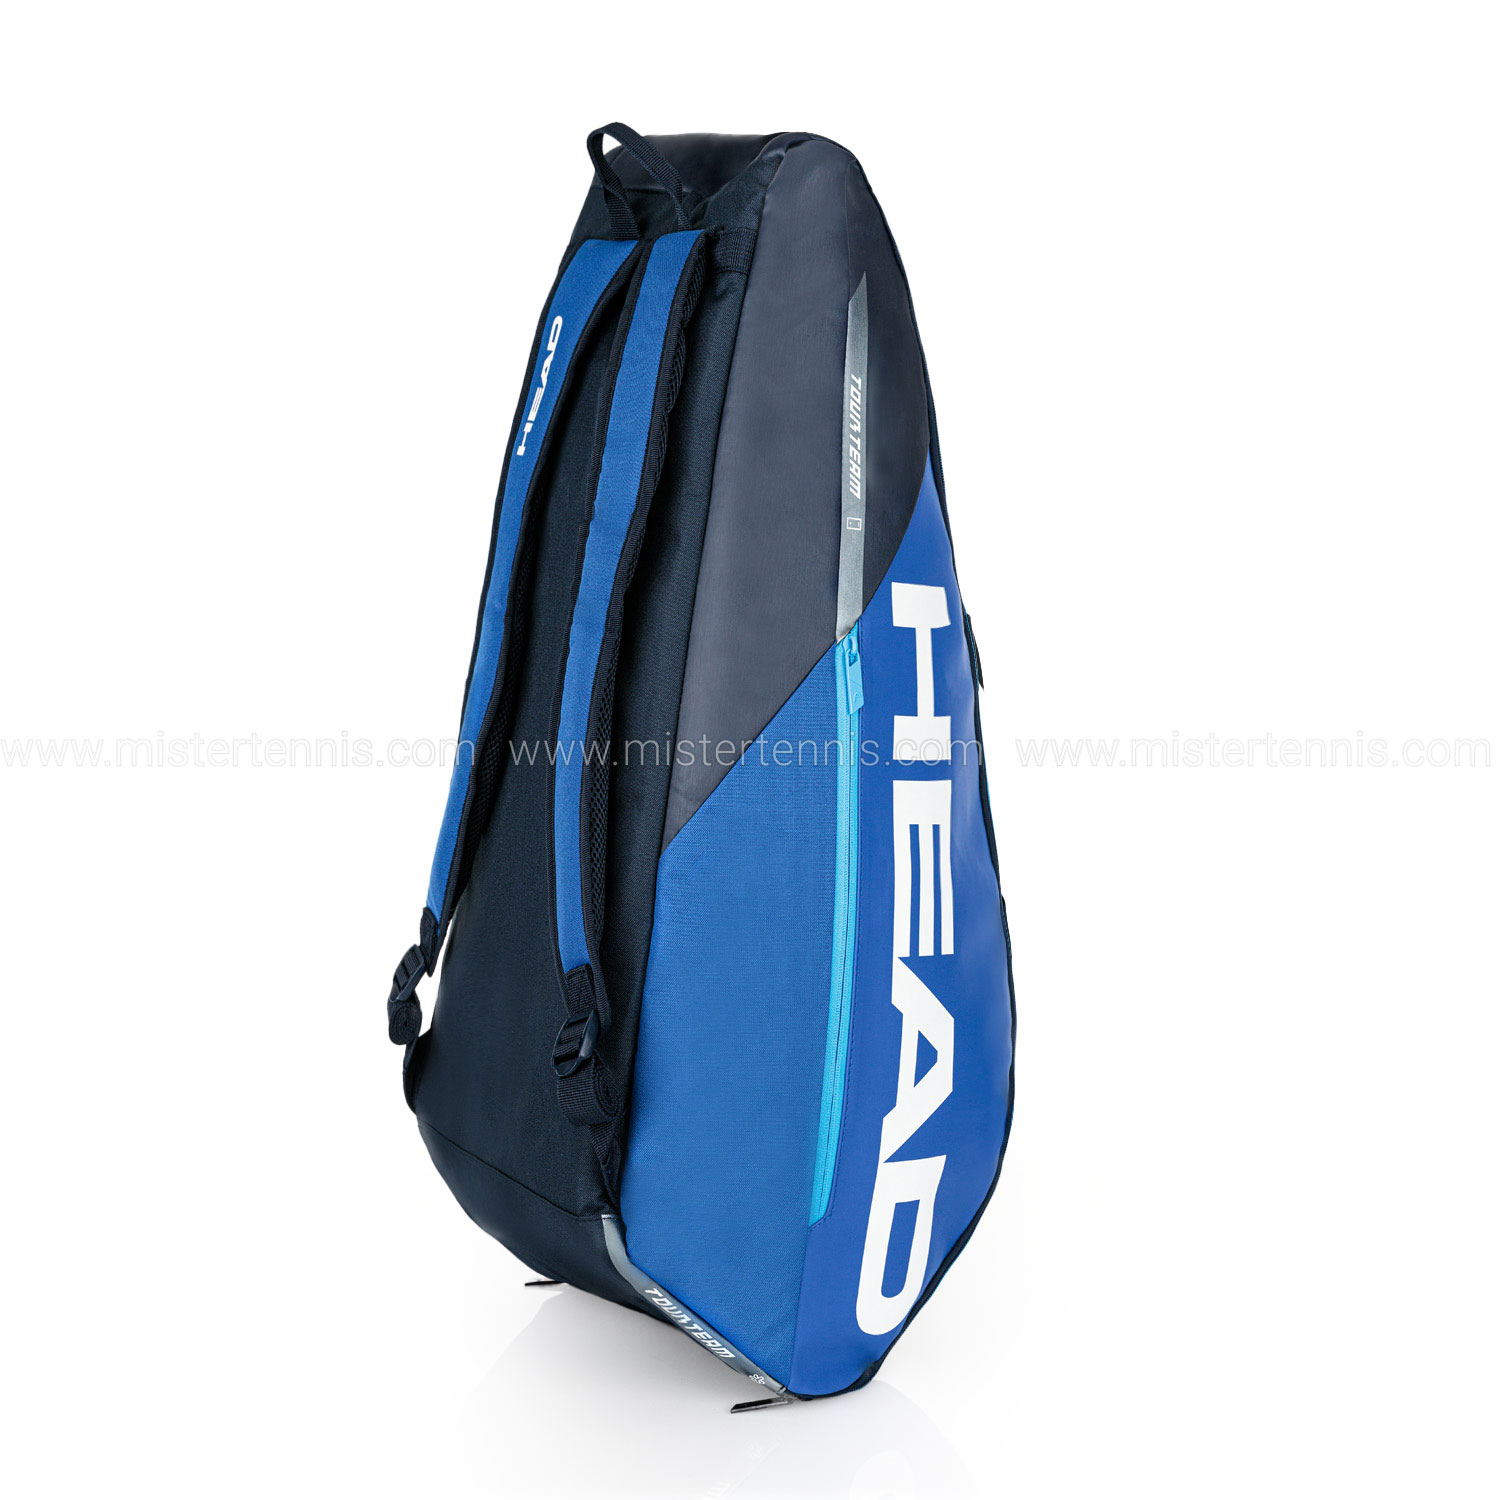 Head Tour Team x 9 Supercombi Bag - Blue/Navy